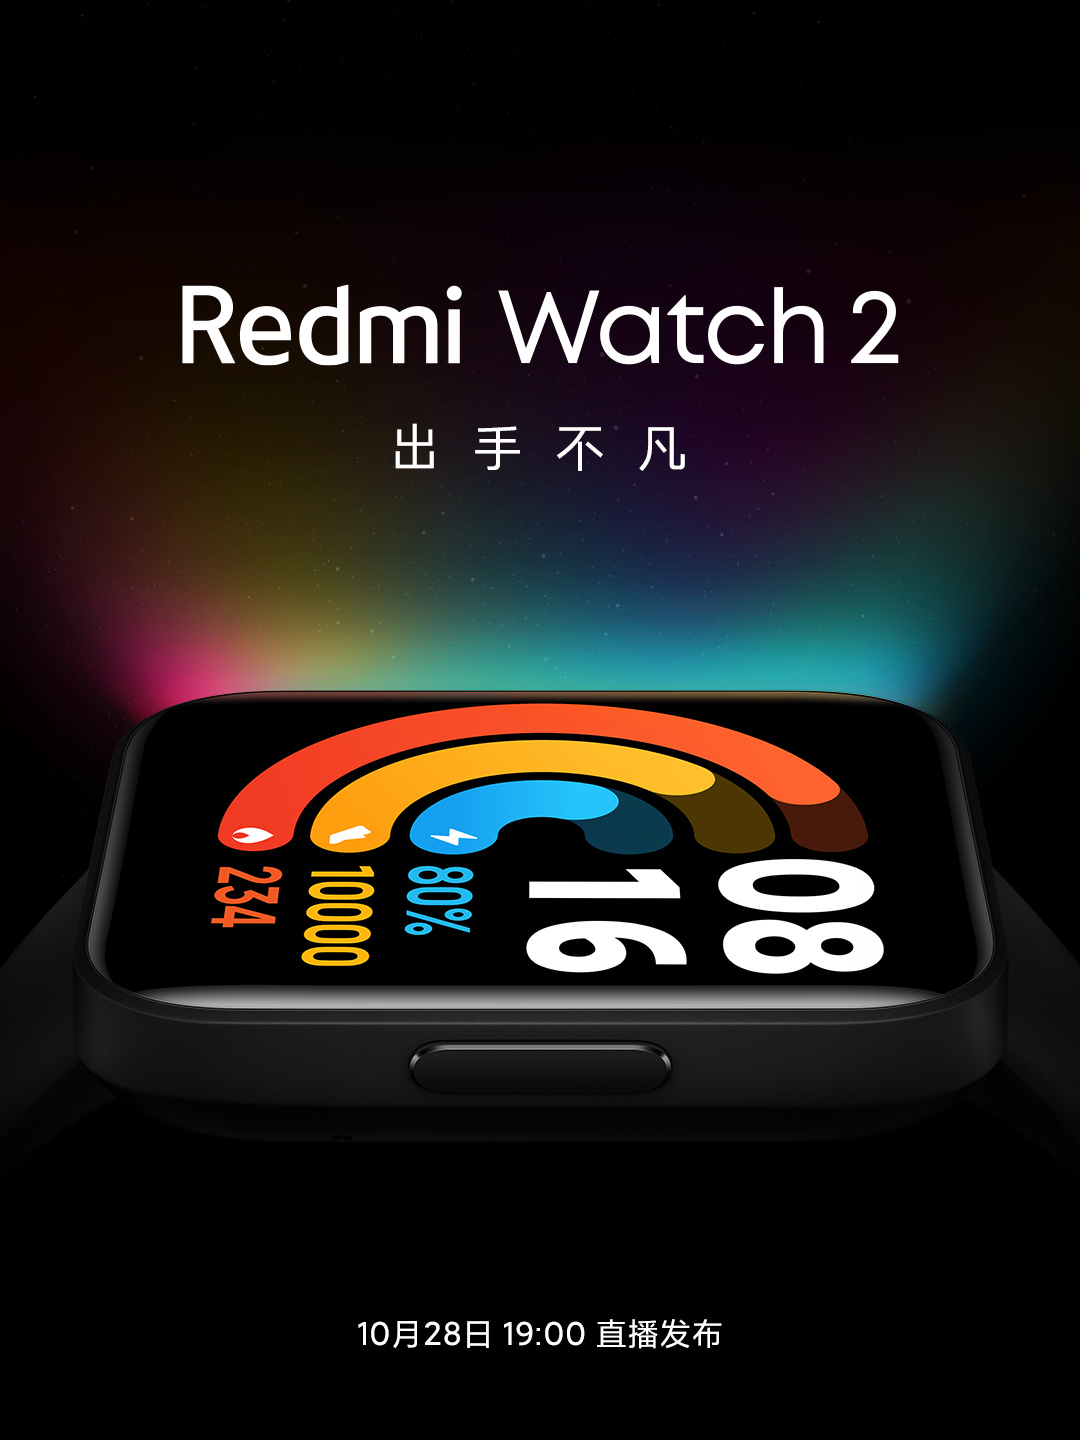 Redmi Watch 2 launch date confirmed